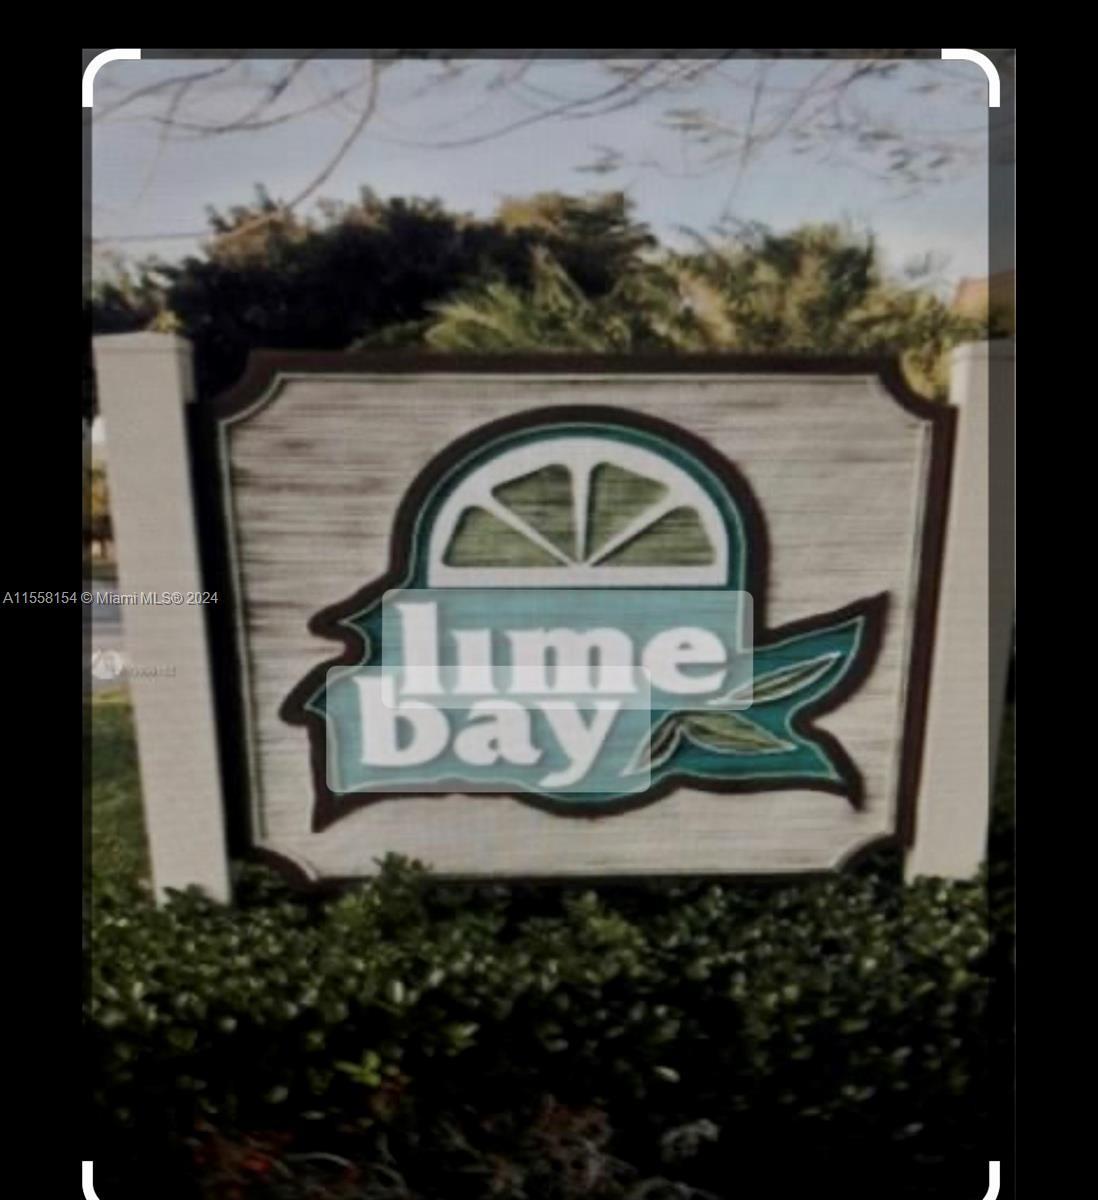 Photo of 9080 Lime Bay Blvd #109 in Tamarac, FL